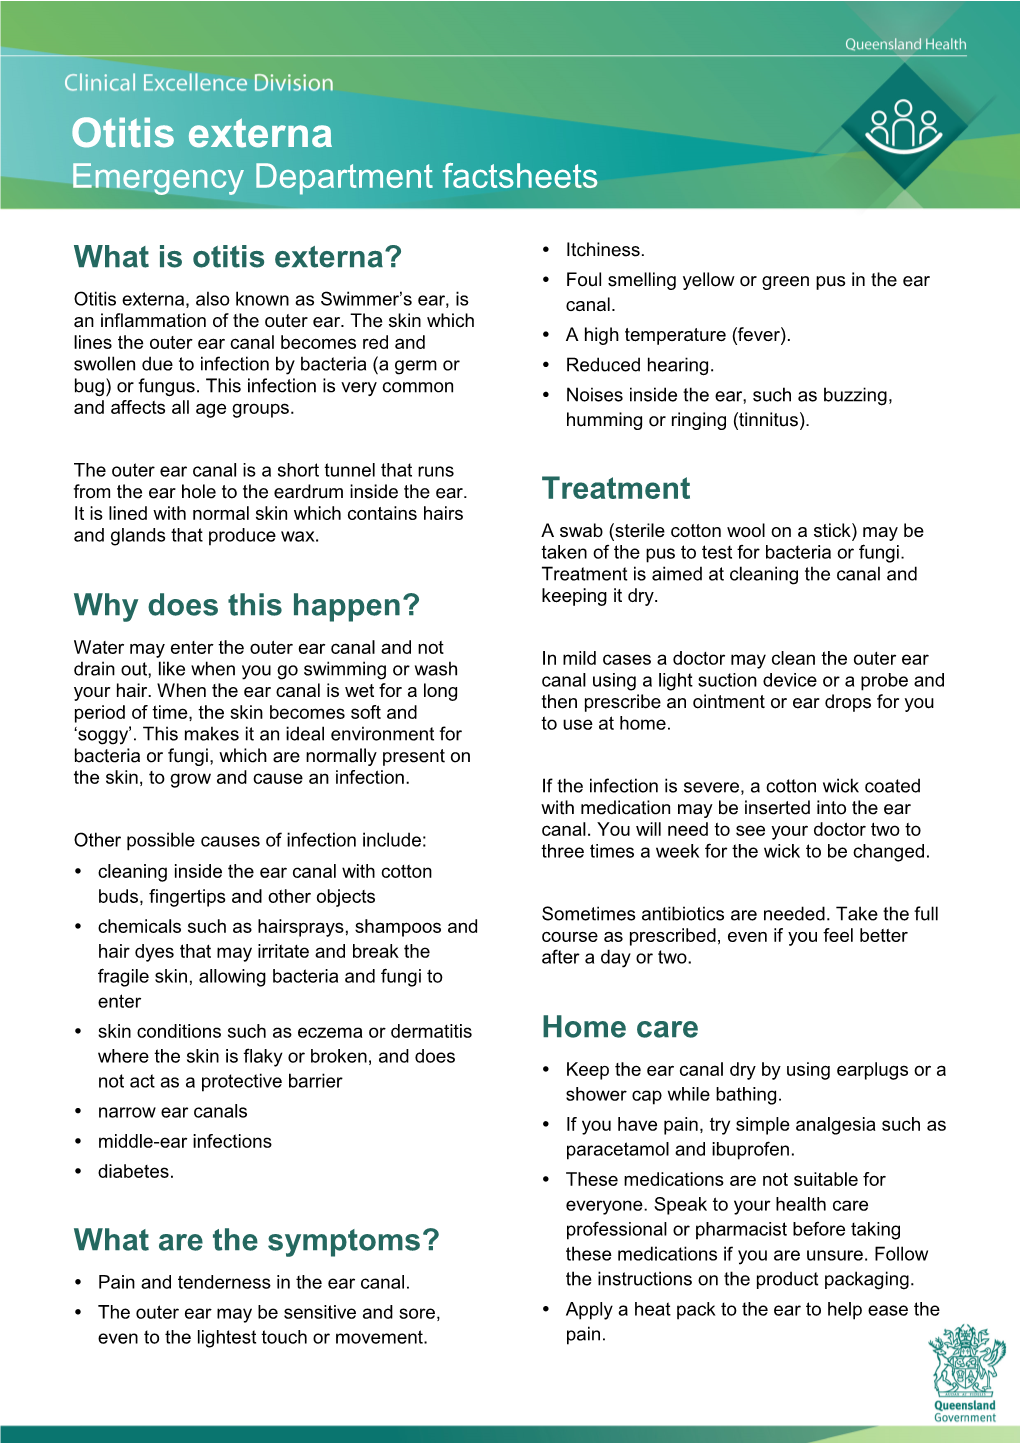 Otitis Externa | Emergency Department Patient Information Sheet